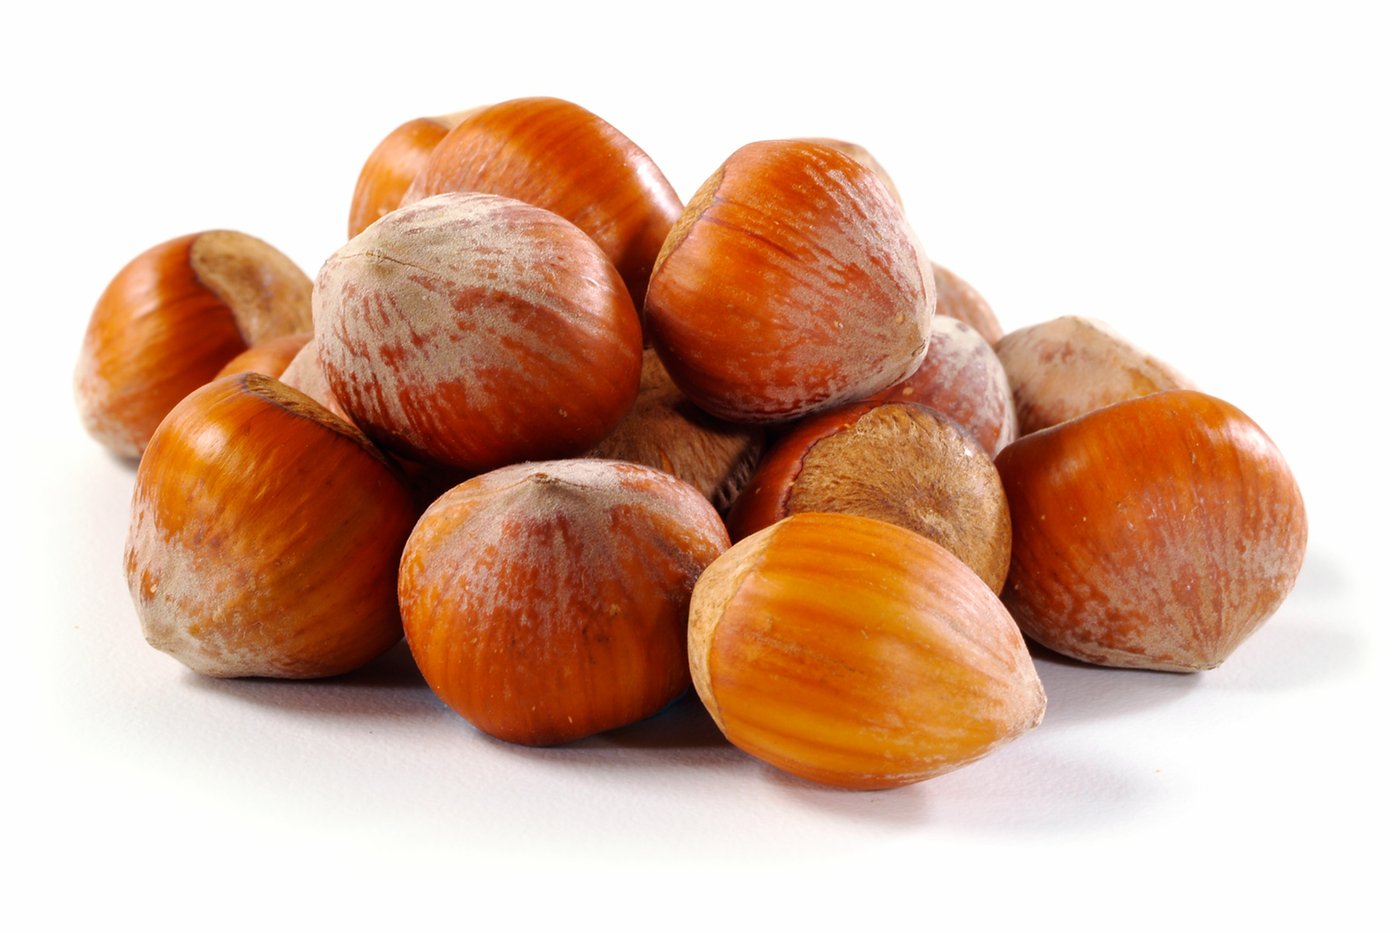 Hazelnuts / Filberts (In Shell) image zoom